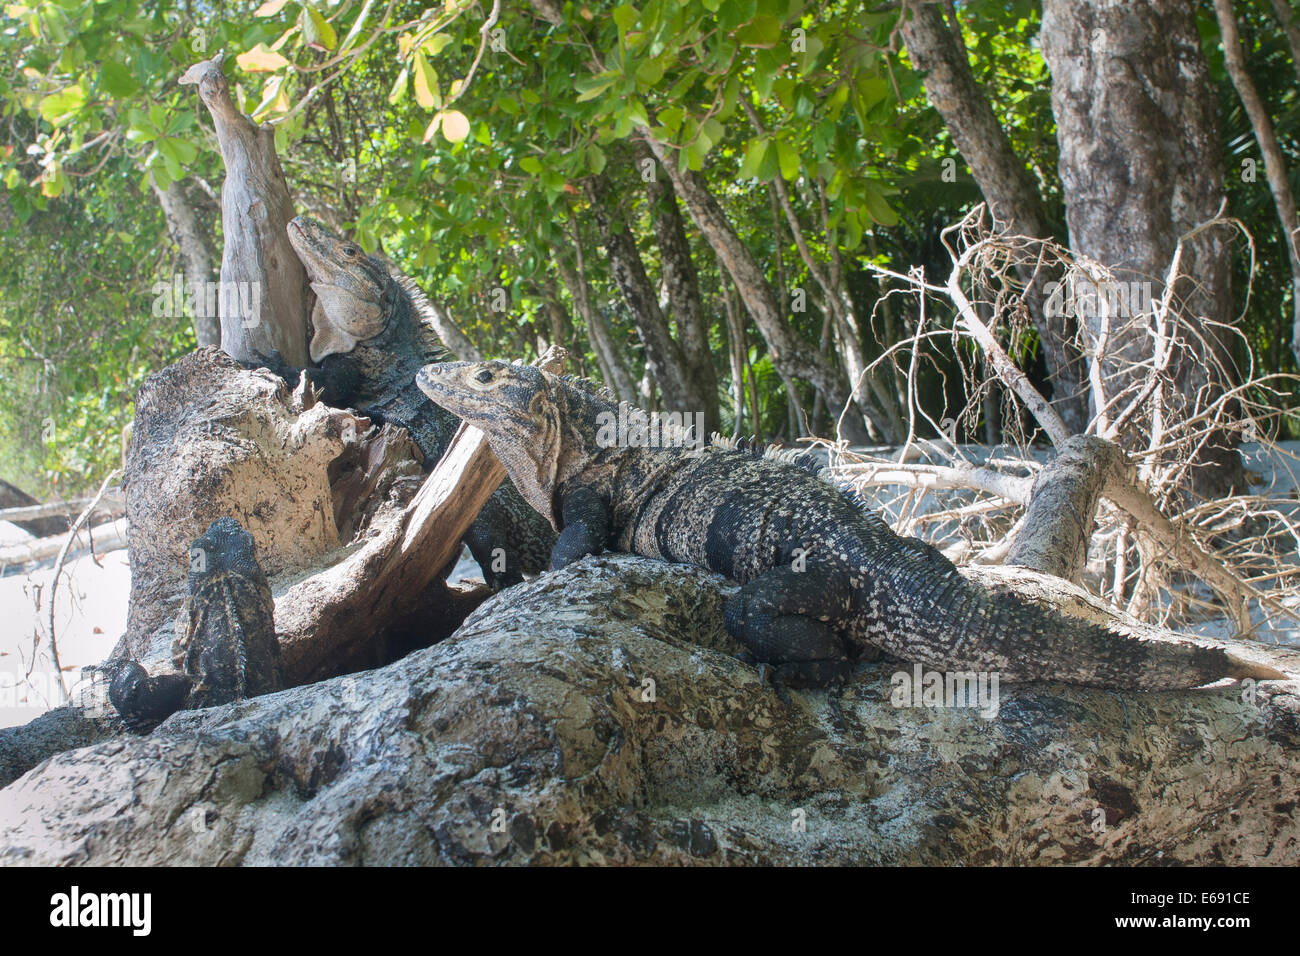 Black spiny-tailed iguanas (Ctenosaura similis) on the beach.  Photographed in Costa Rica. Stock Photo